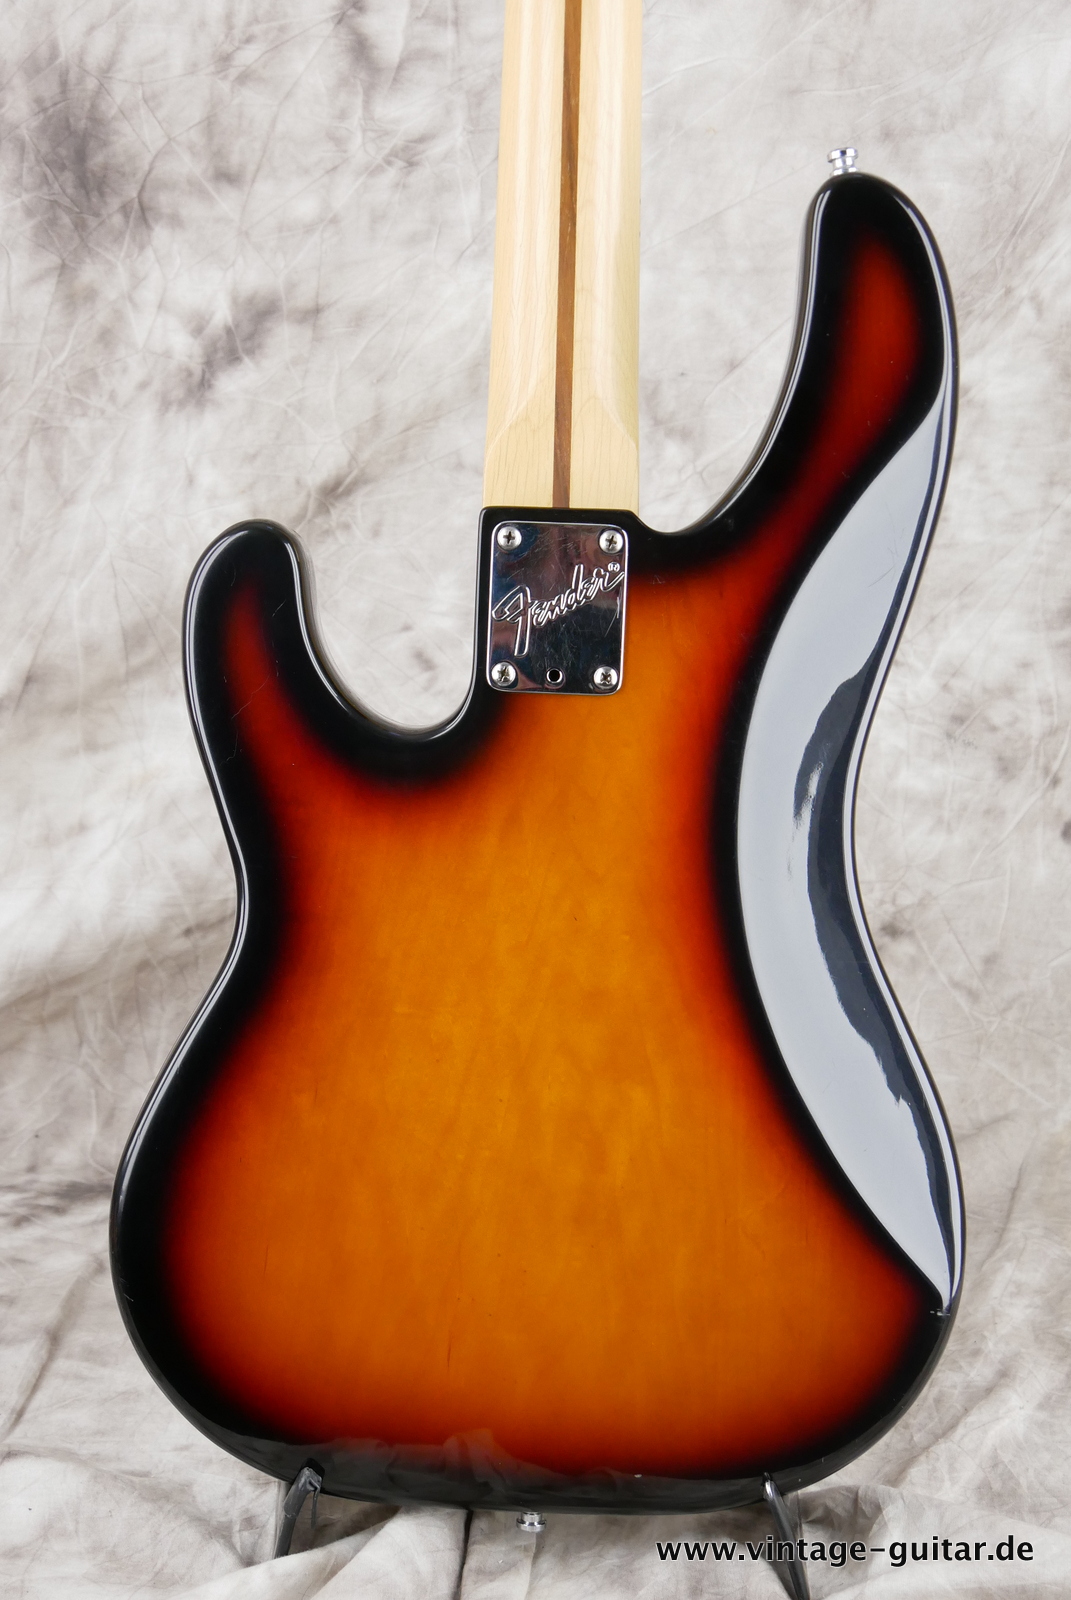 Fender_Precision_plus_USA_sunburst_1992-004.JPG